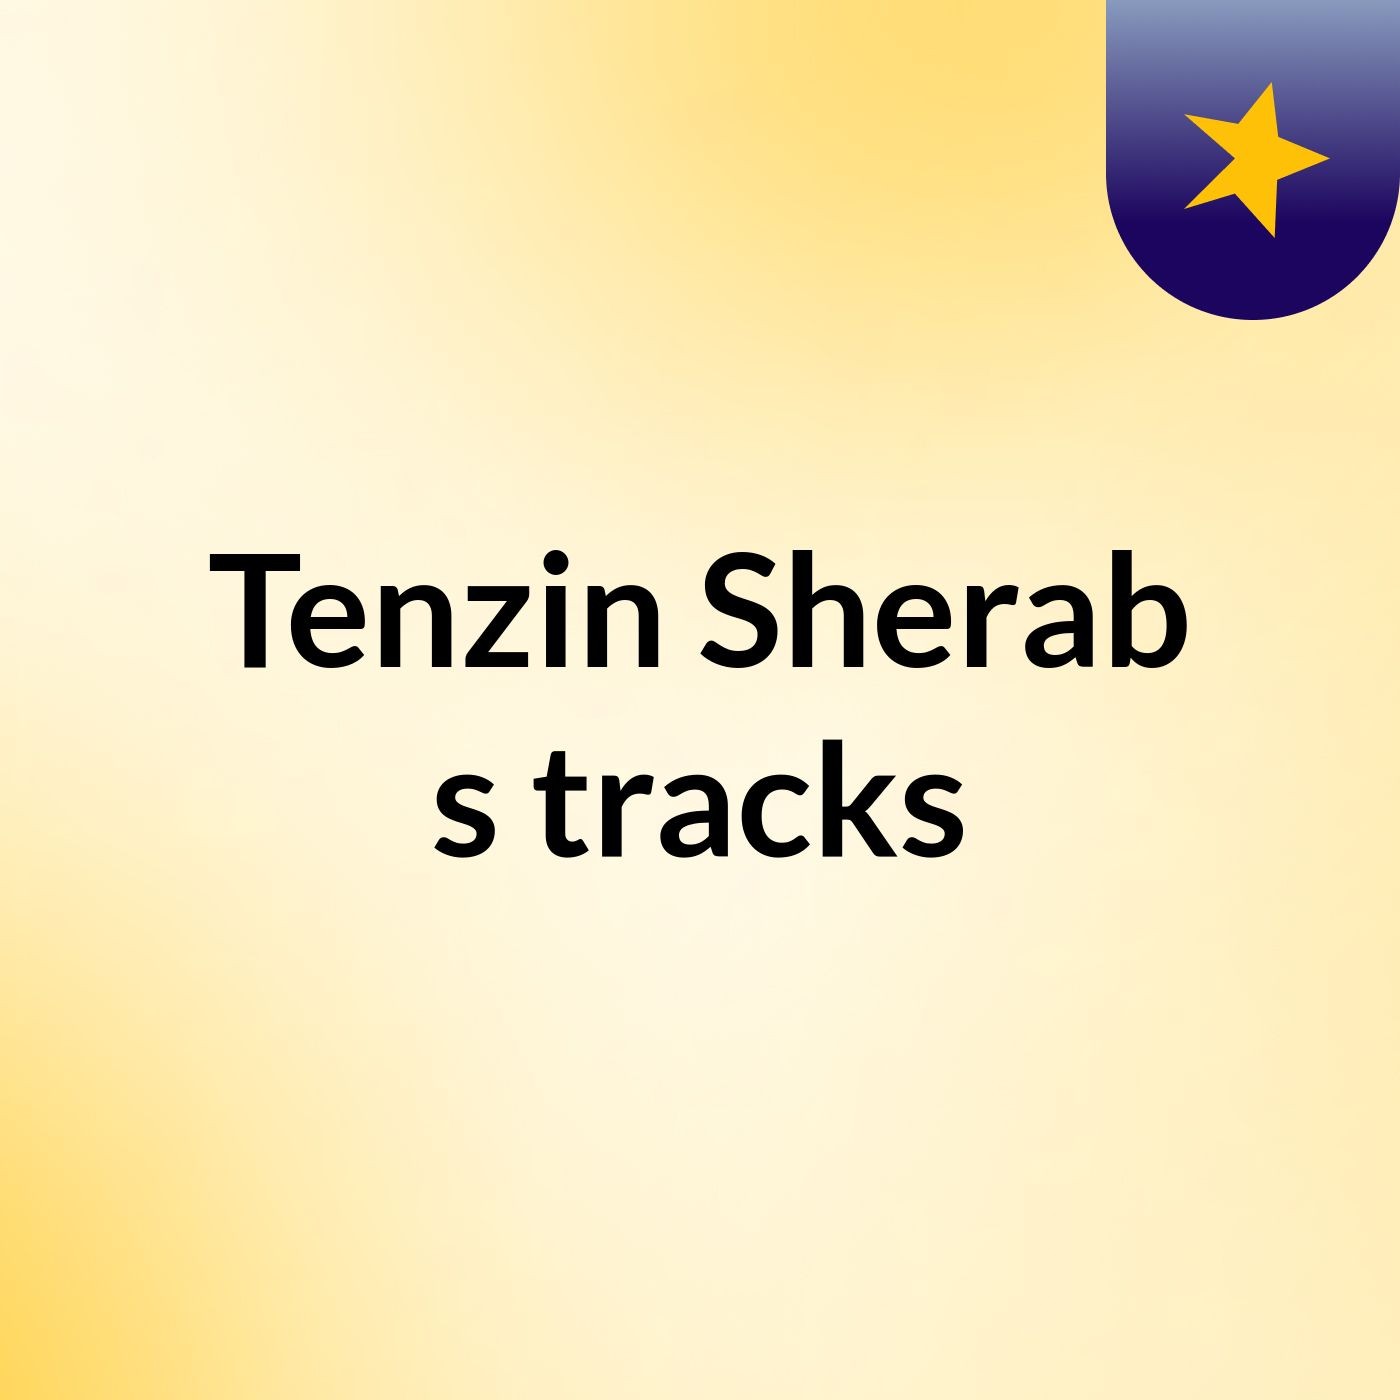 Tenzin Sherab's tracks